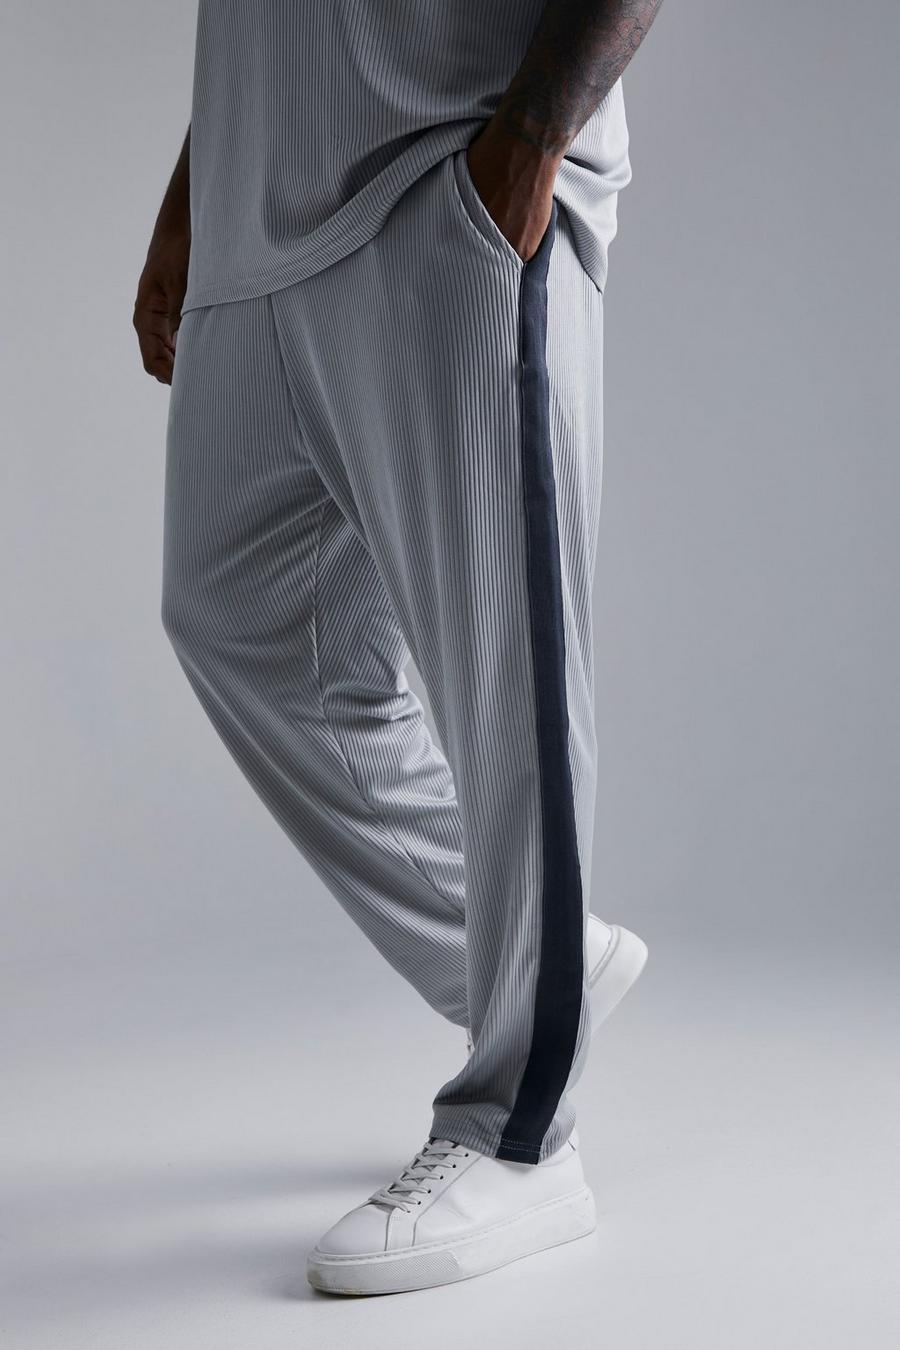 Pantalón deportivo Plus pesquero plisado ajustado con cinta, Grey gris